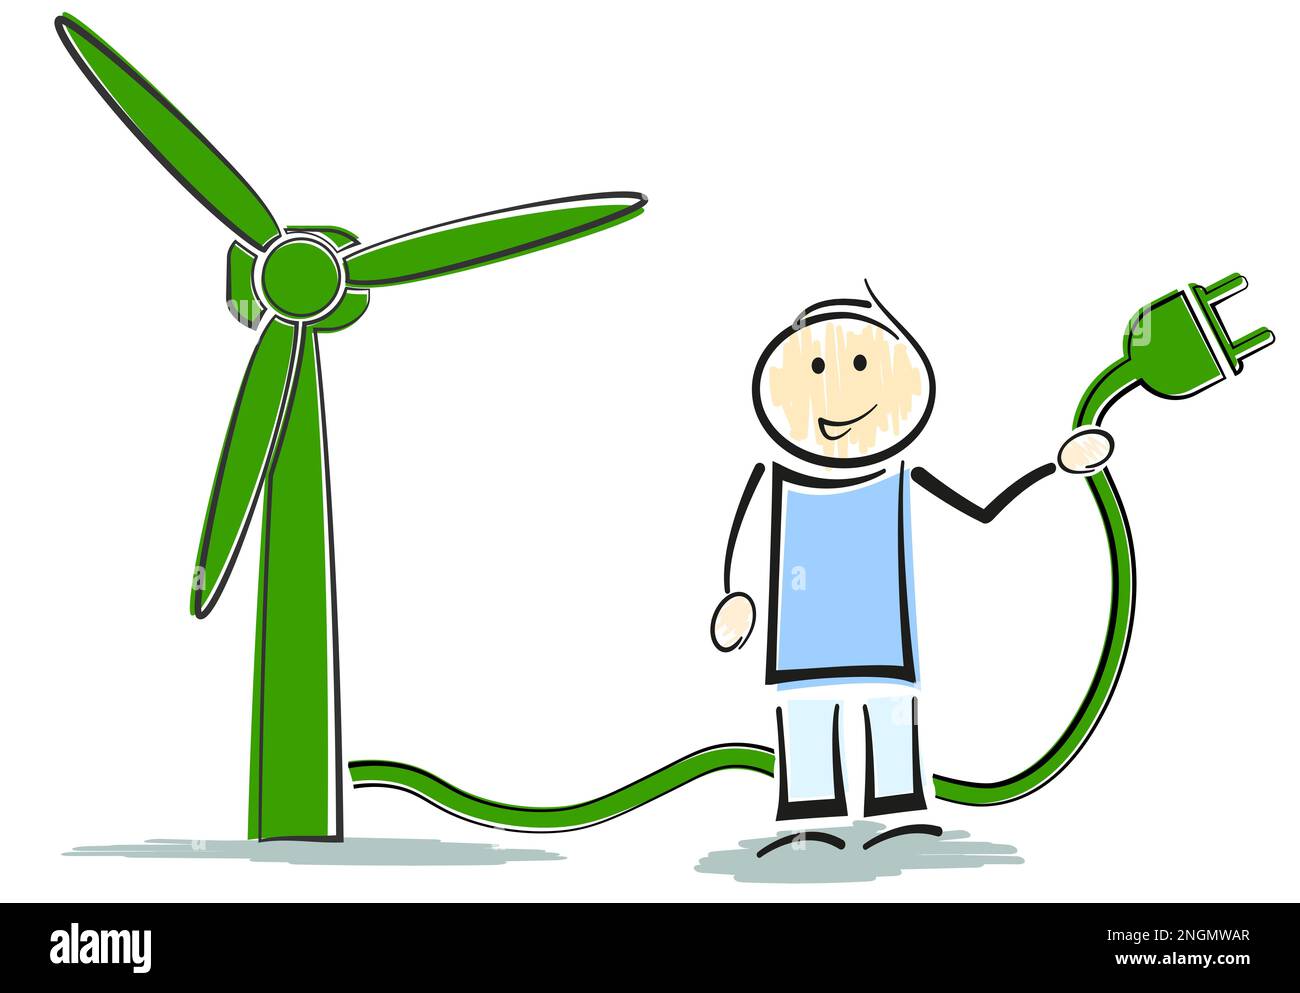 stickman character standing next to wind turbine, green renewable energy concept vector illustration Stock Photo